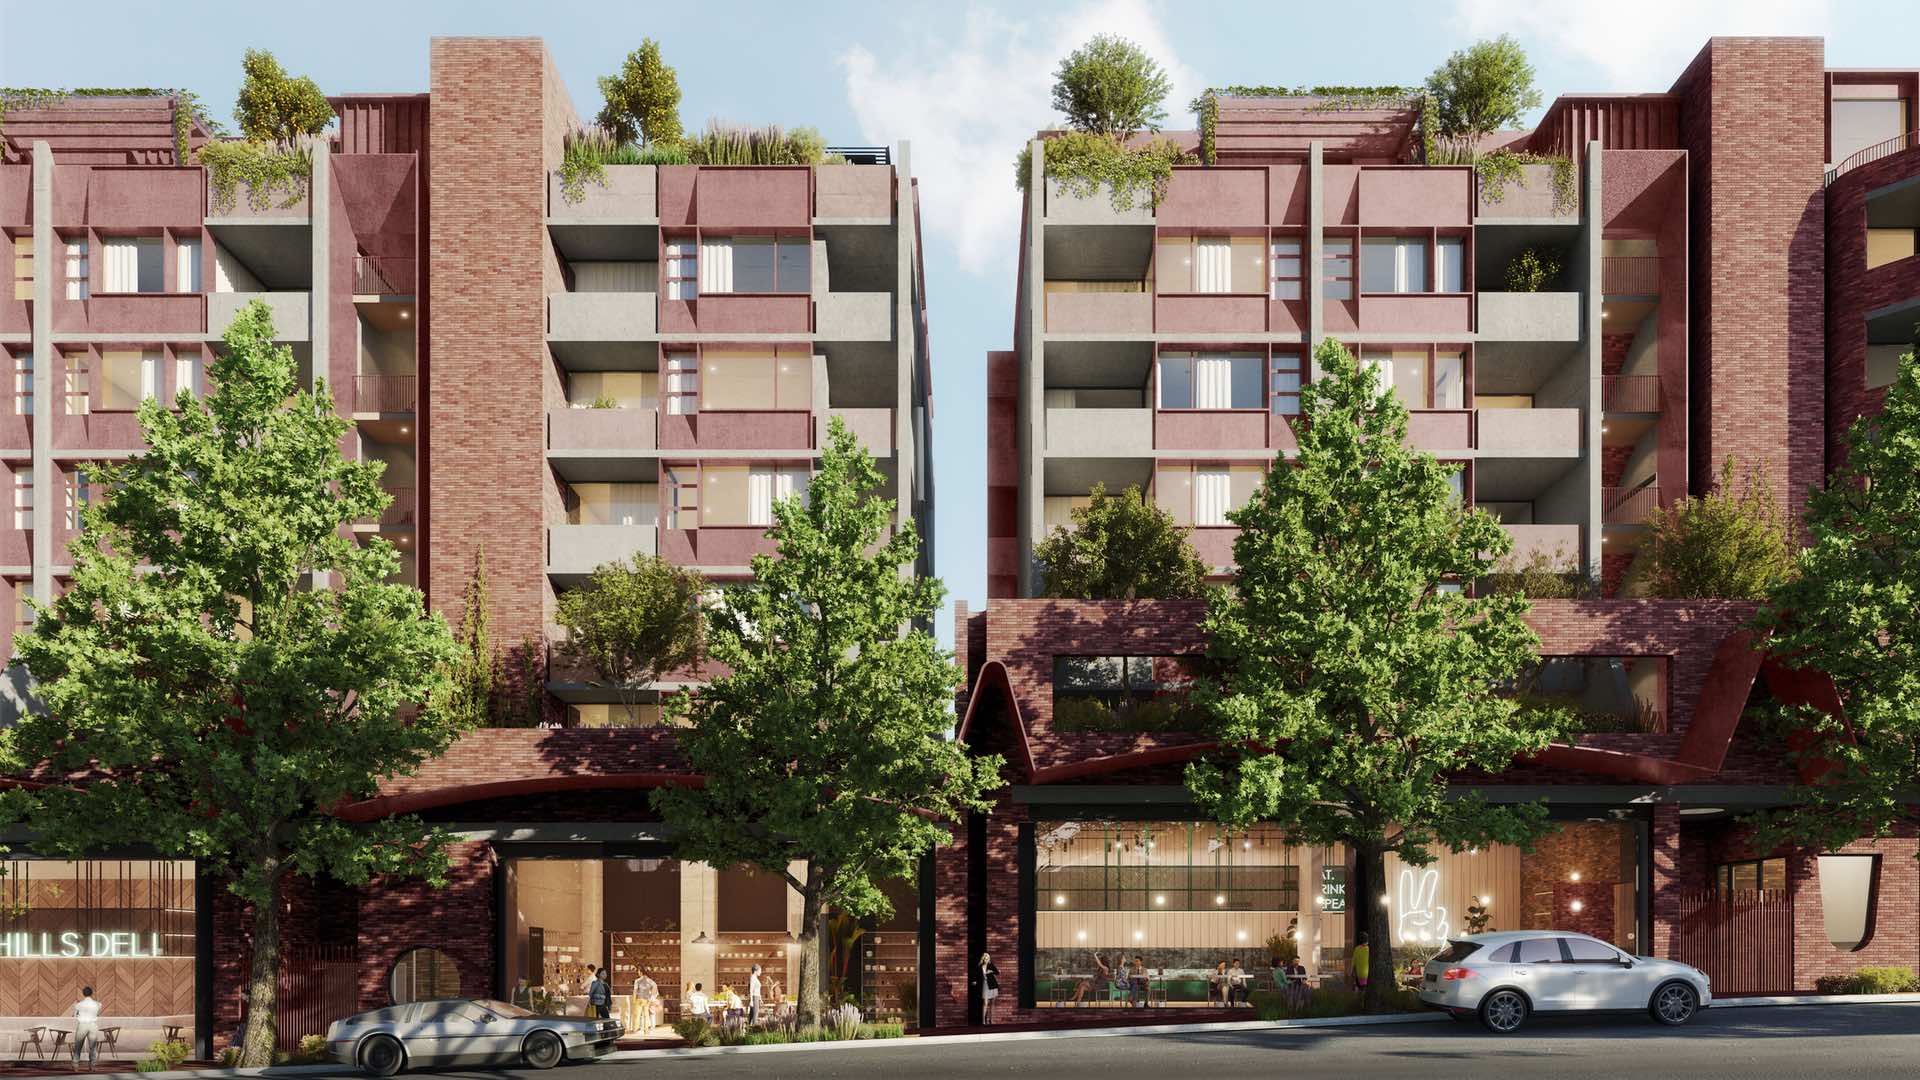 Surry Hills Shopping Village Is Set to Undergo a Drastic Modern Redevelopment